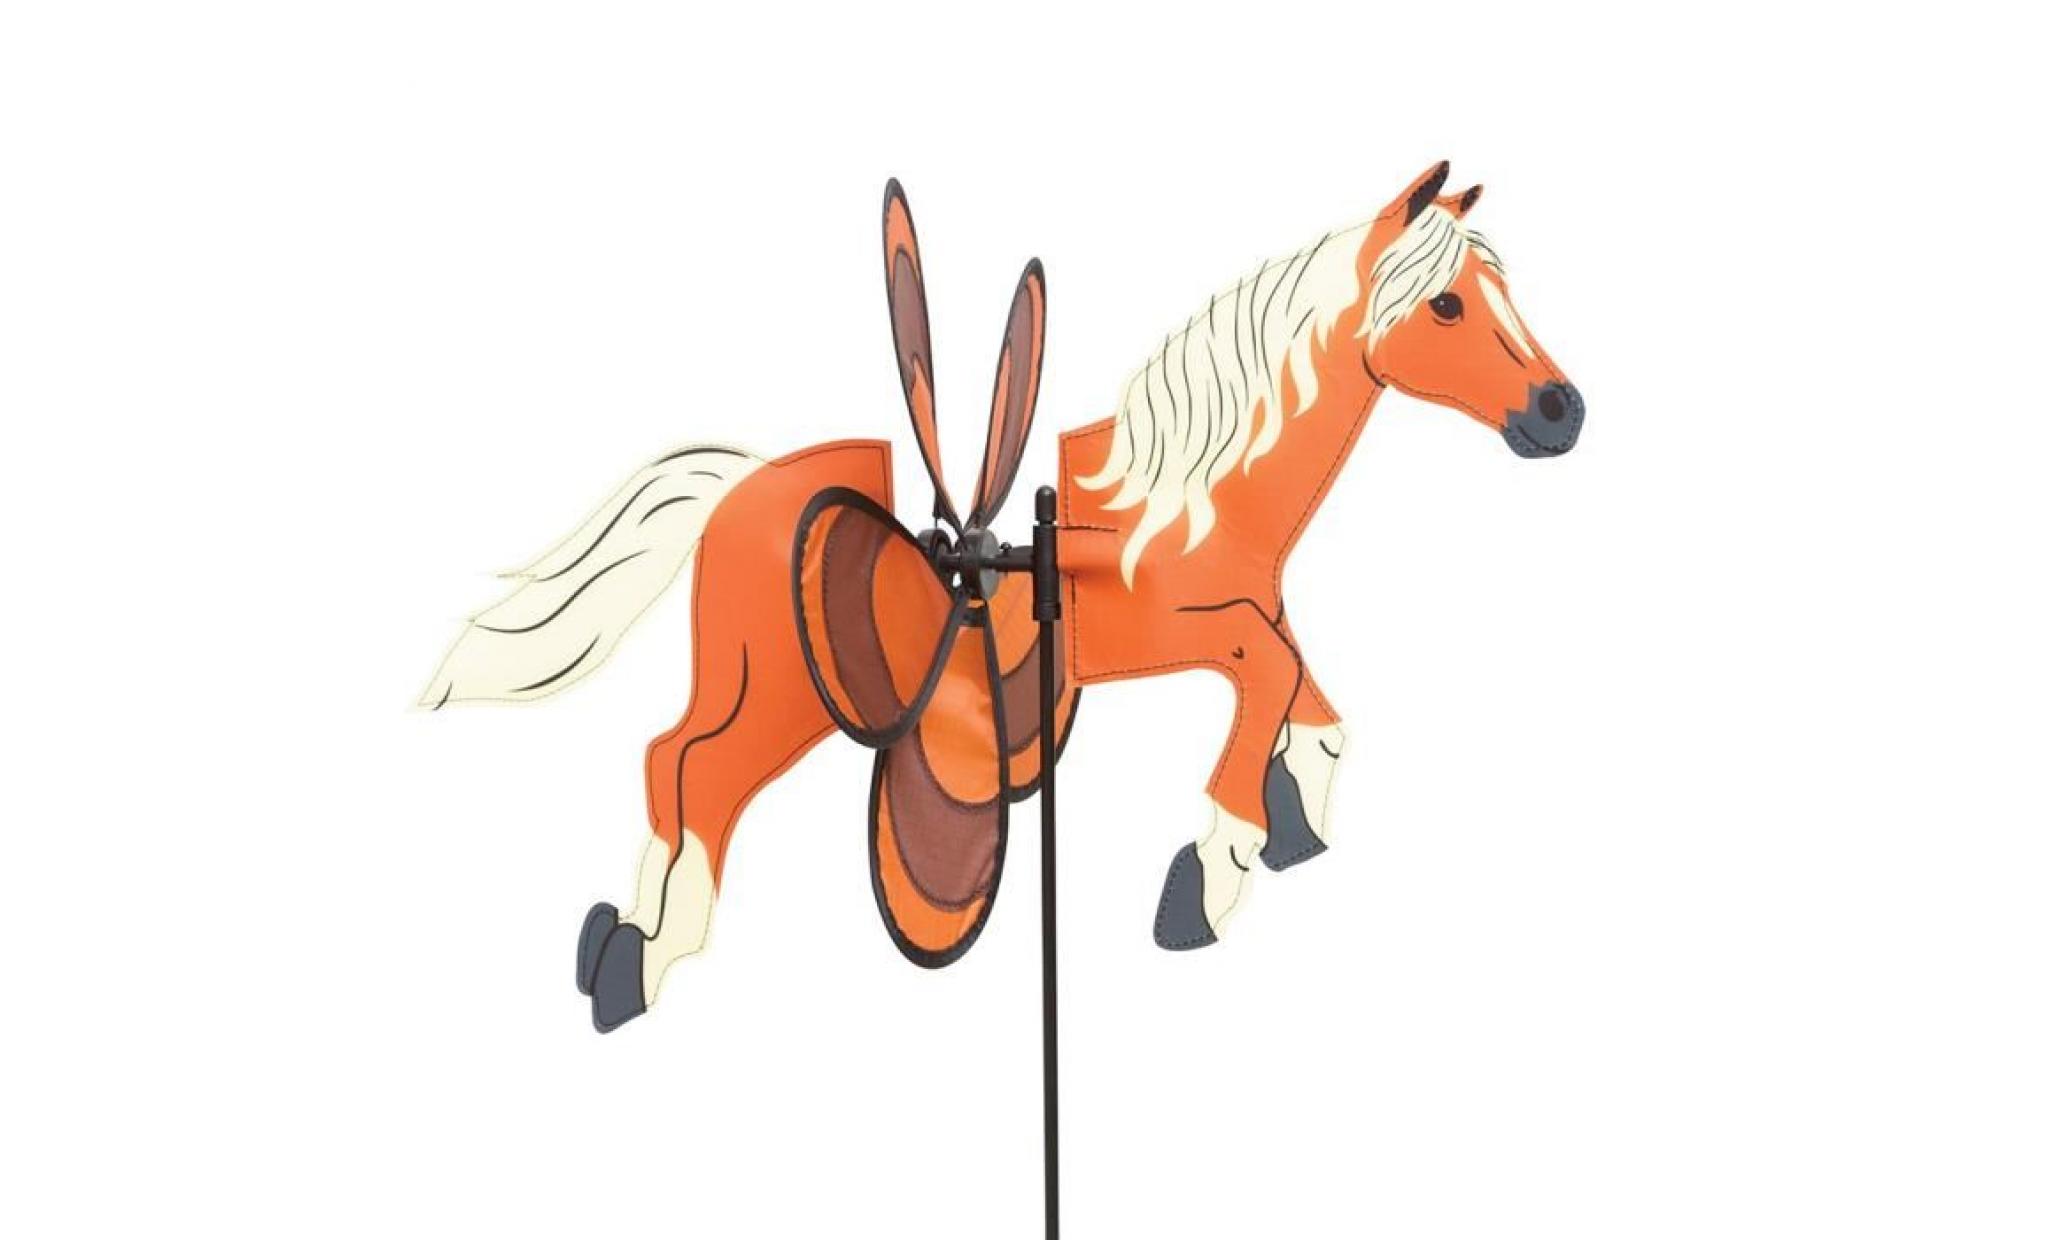 hq invento moulin à vent poney spin critter pony